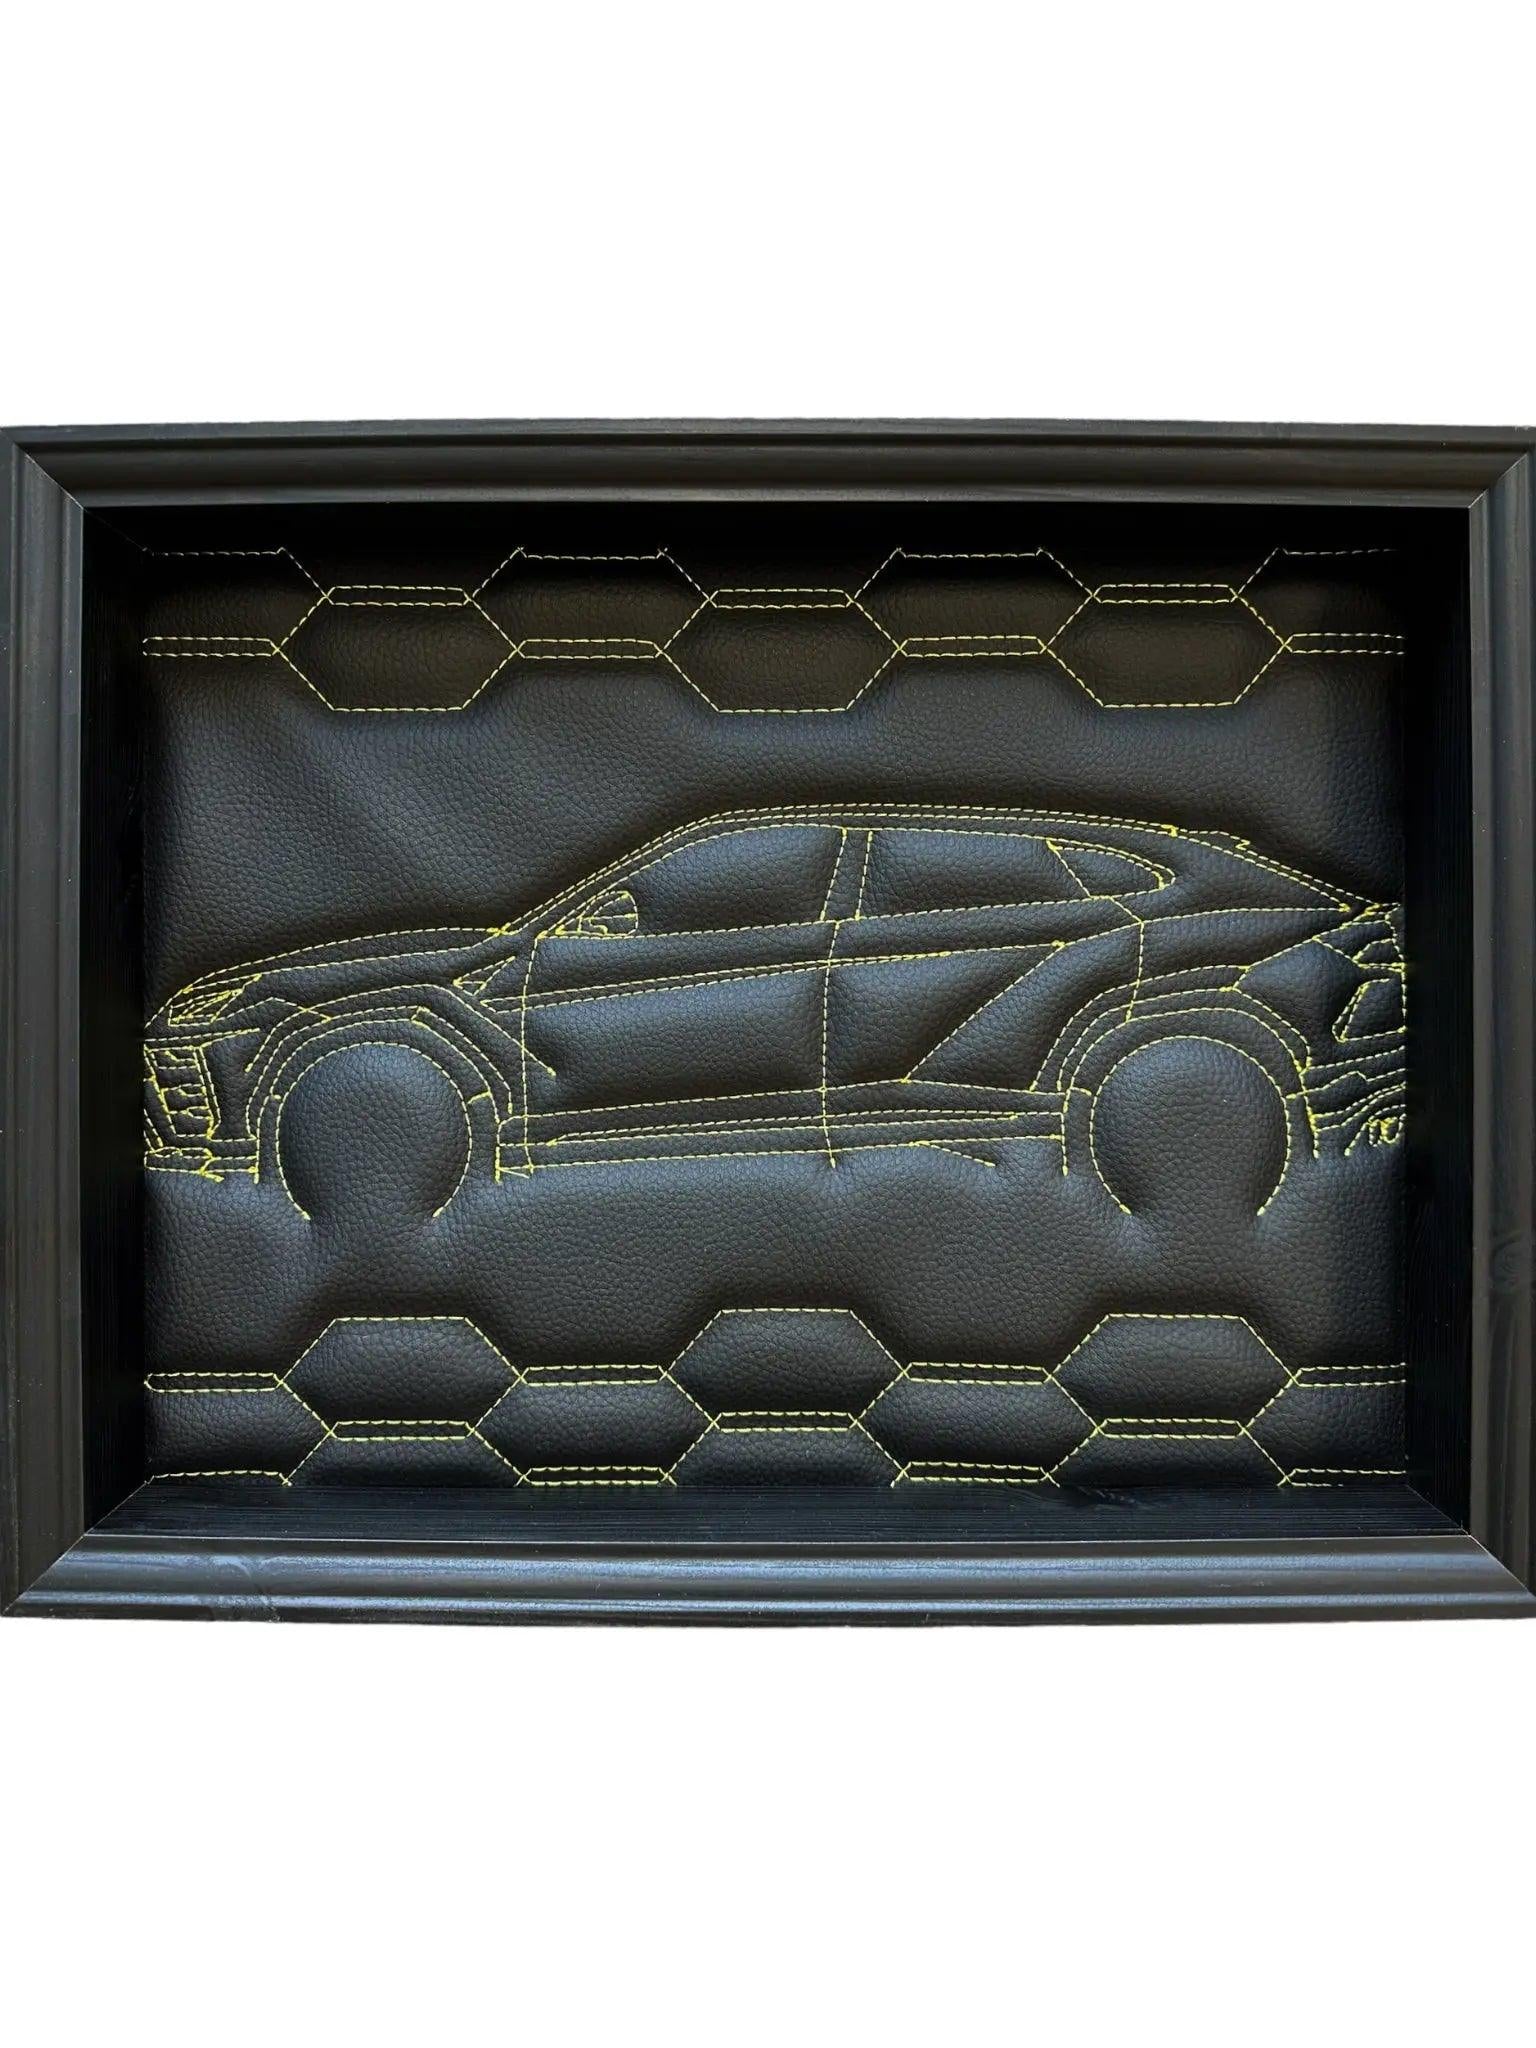 Black Leather Lamborghini Urus Inspired Wall Art: Embroidered Yellow Stitch